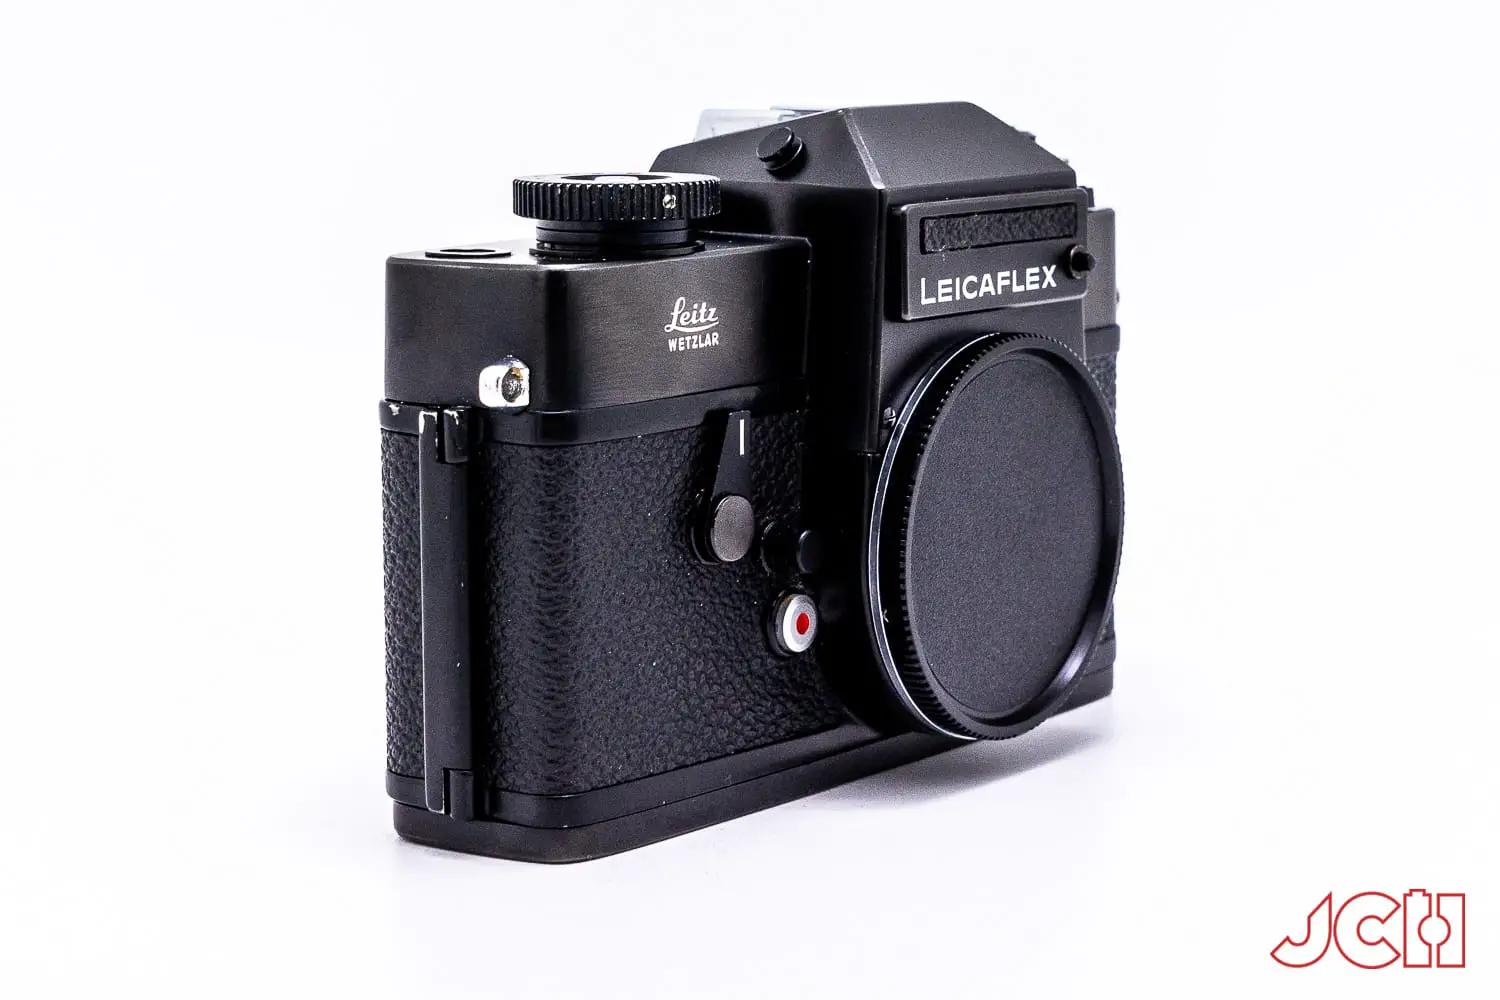 Leicaflex SL2 Body - Japan Camera Hunter